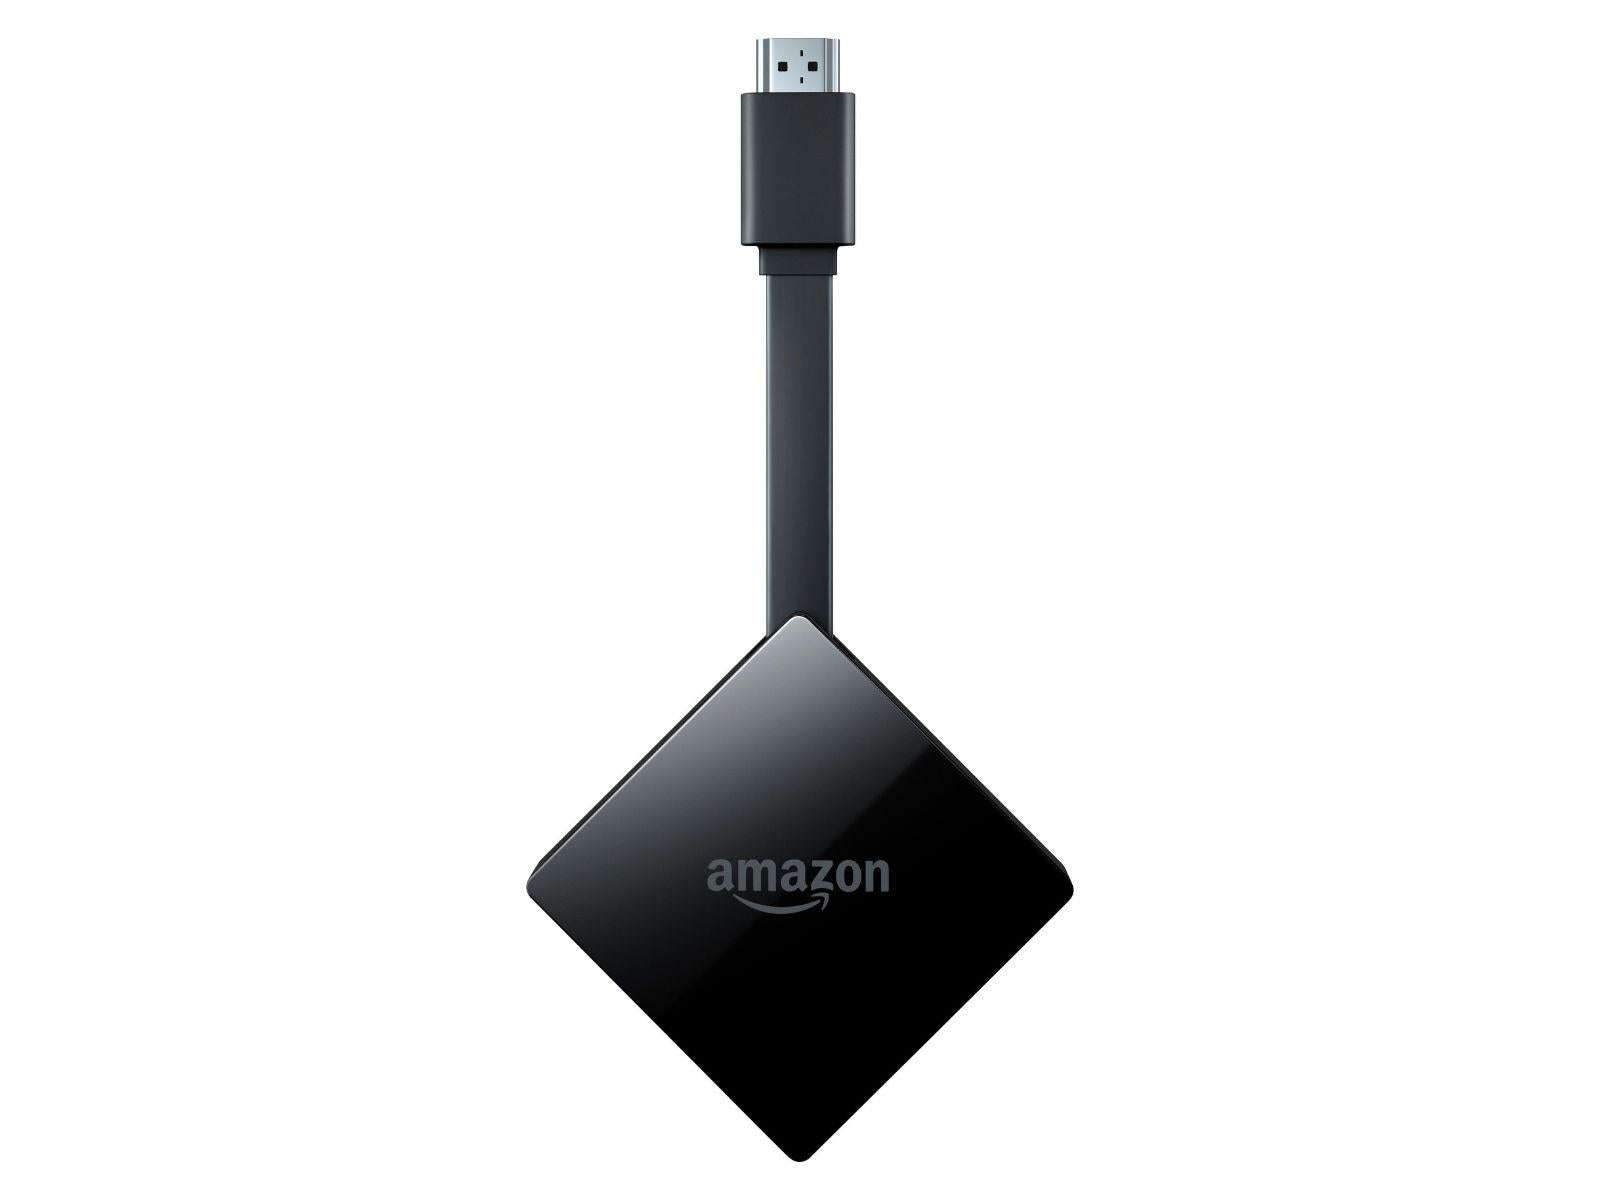 Image shows the Amazon Fire TV Pendant